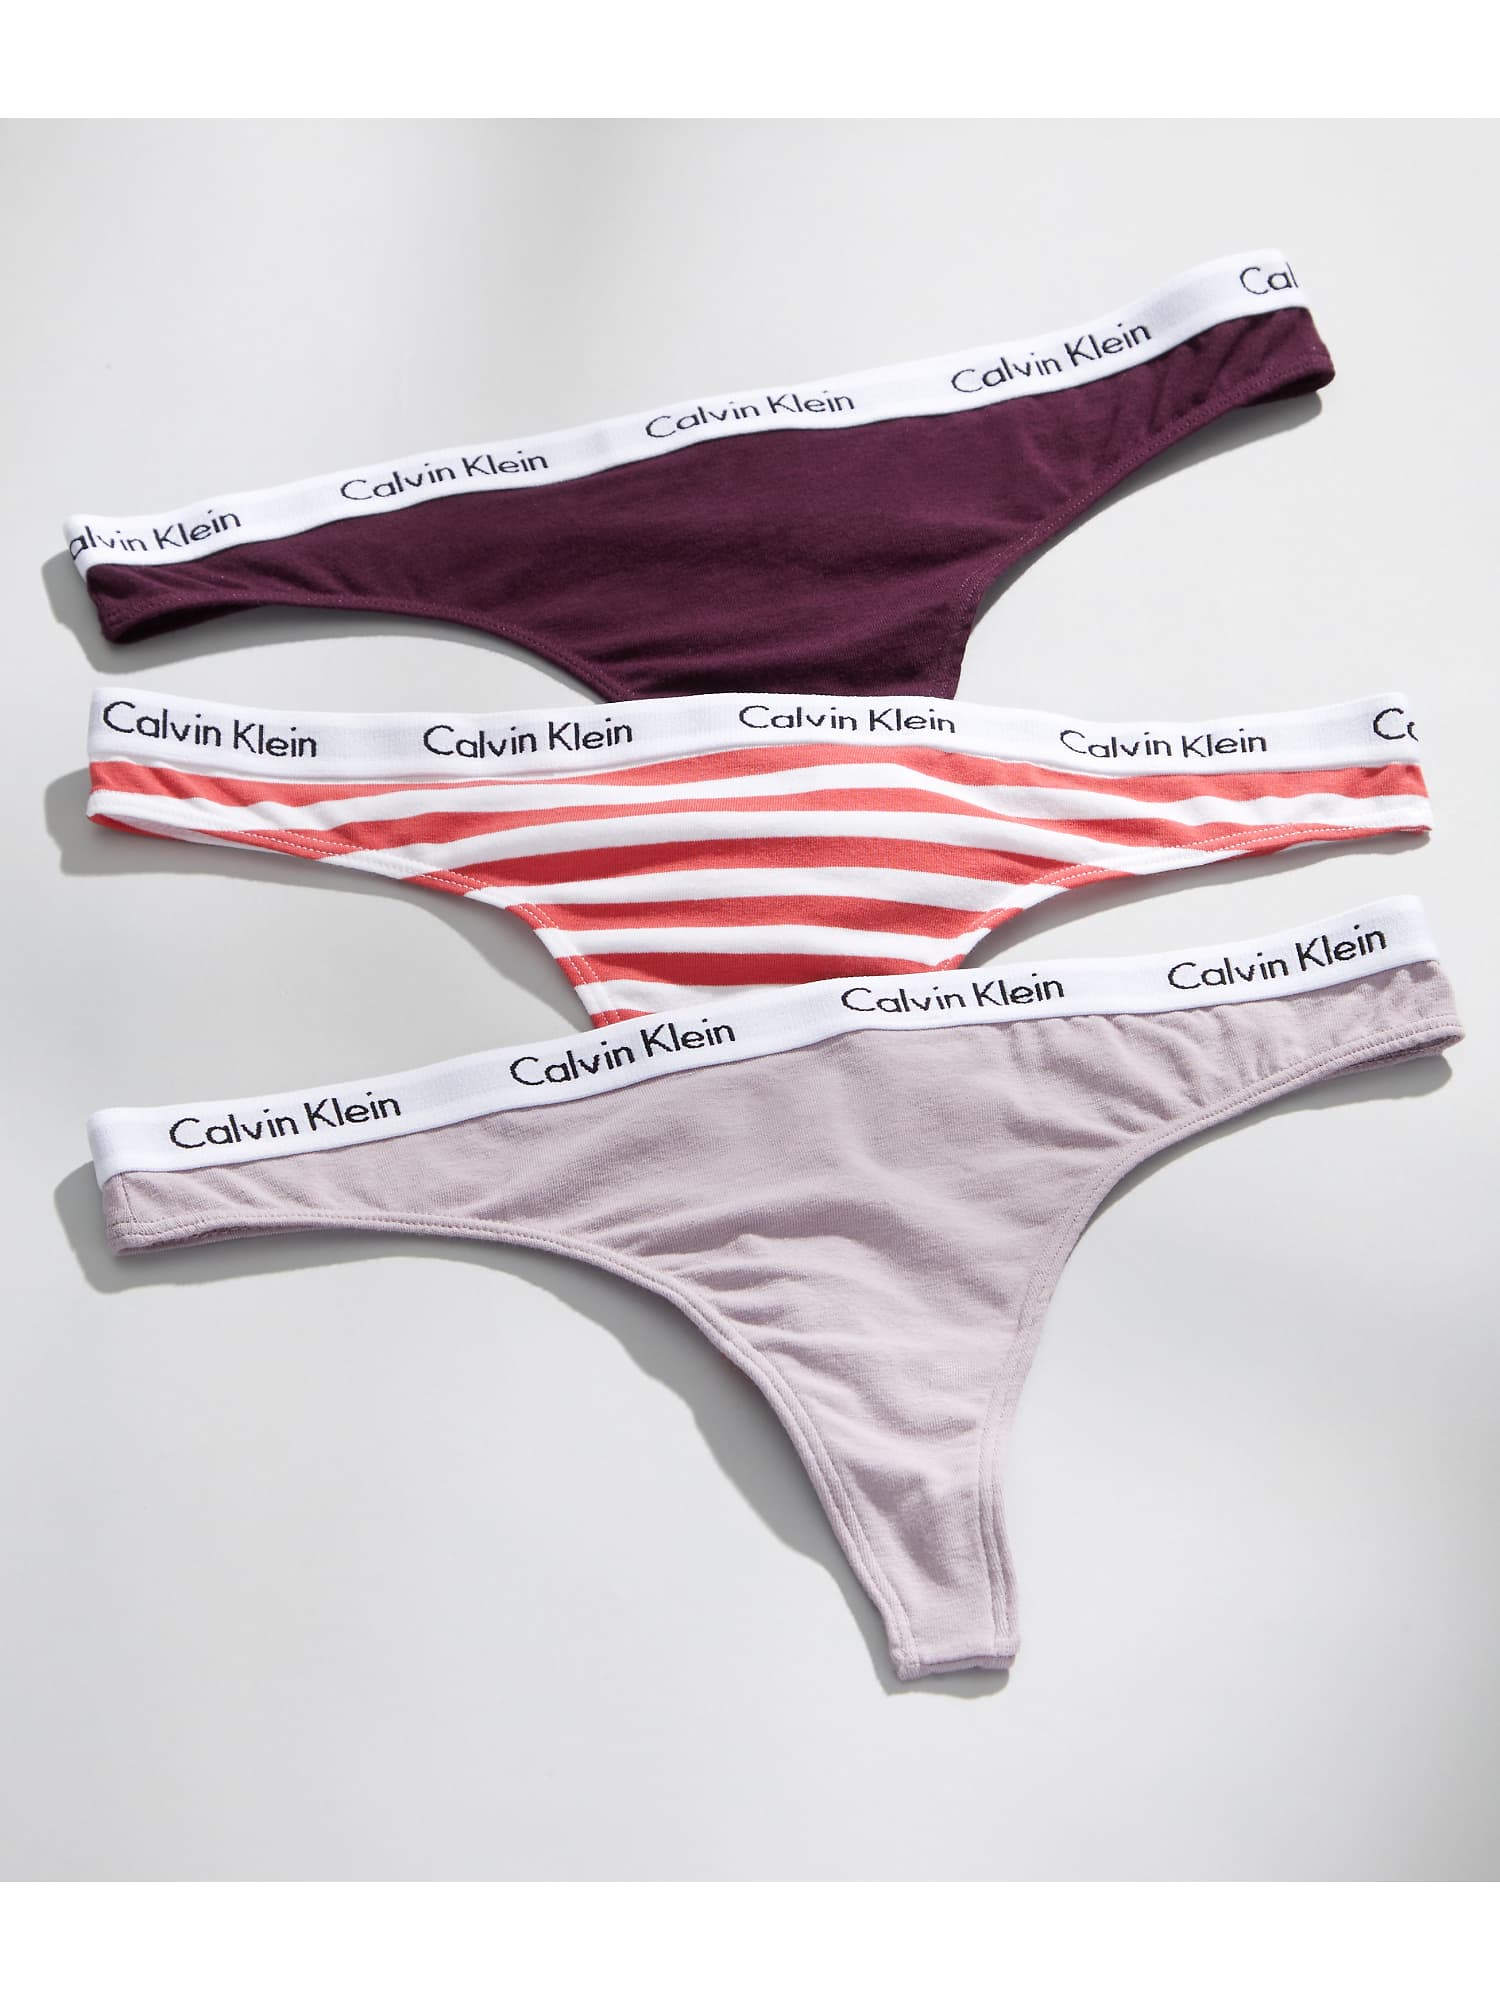 Calvin Klein Carousel Thong 3-Pack - Women's